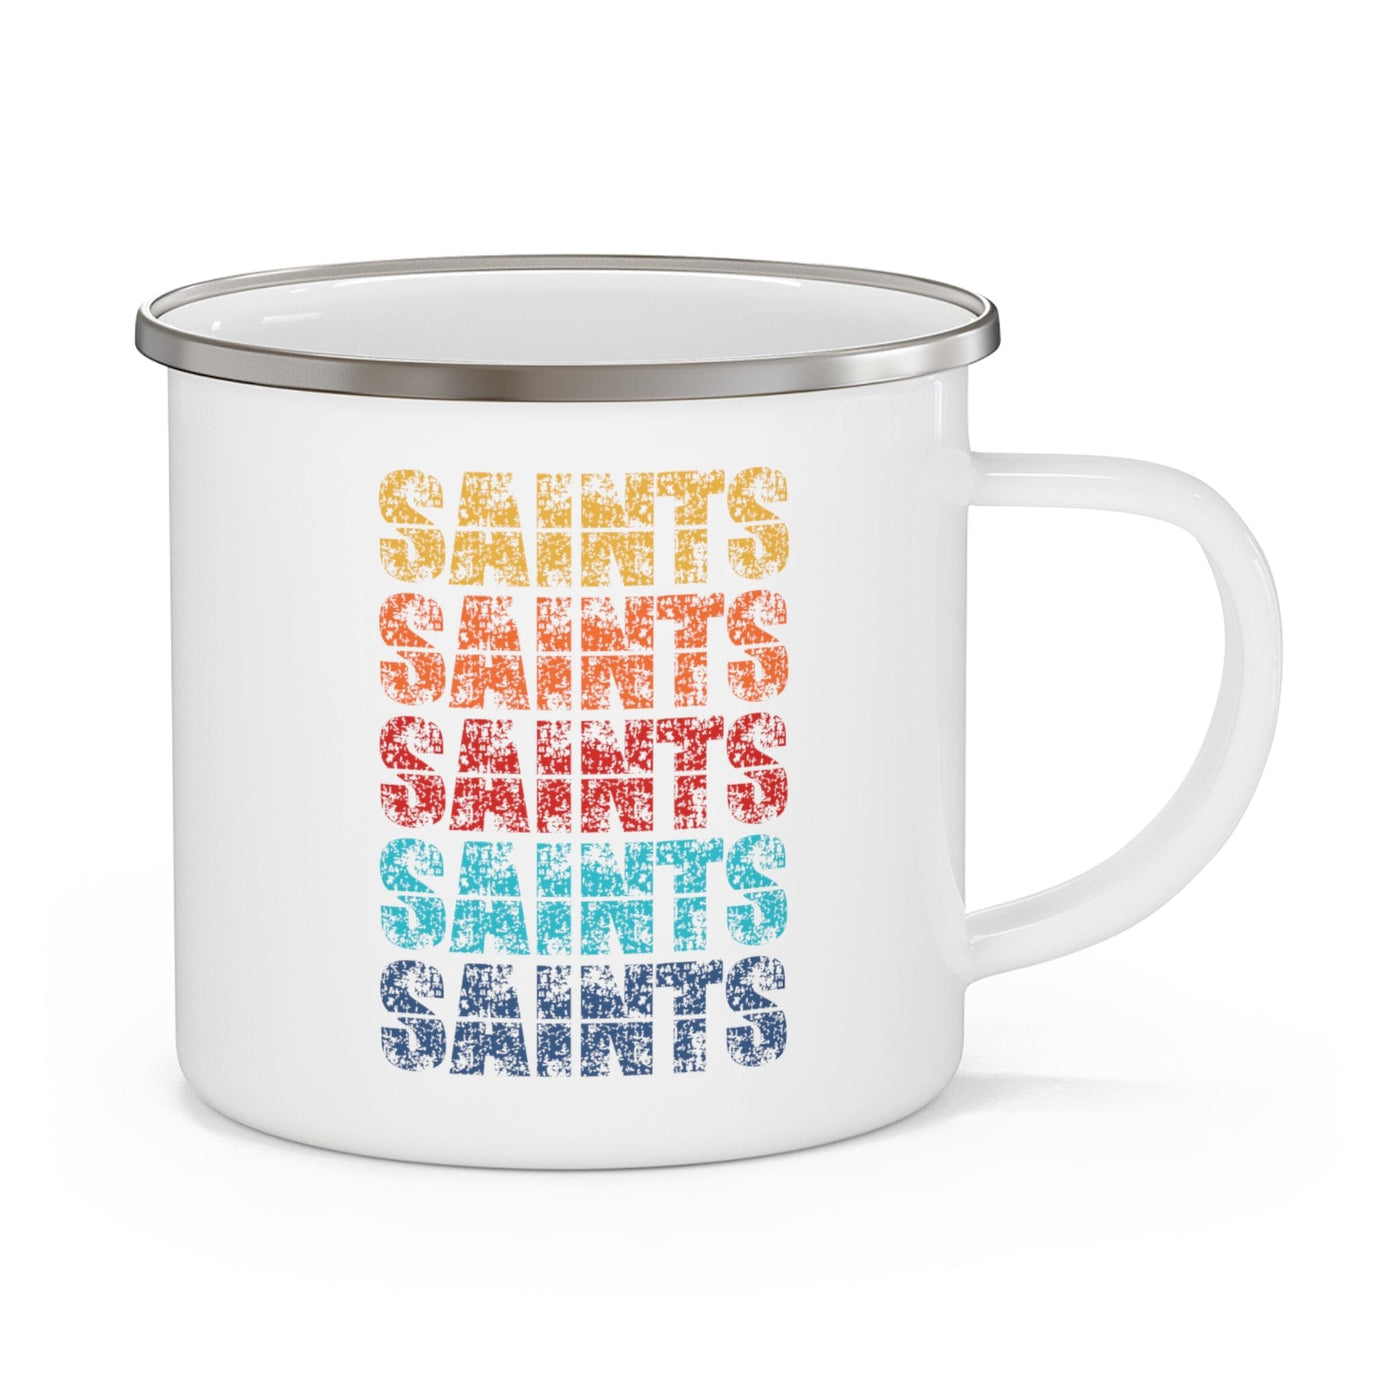 Enamel Camping Mug Saints Colorful Art Illustration - Decorative | Mugs